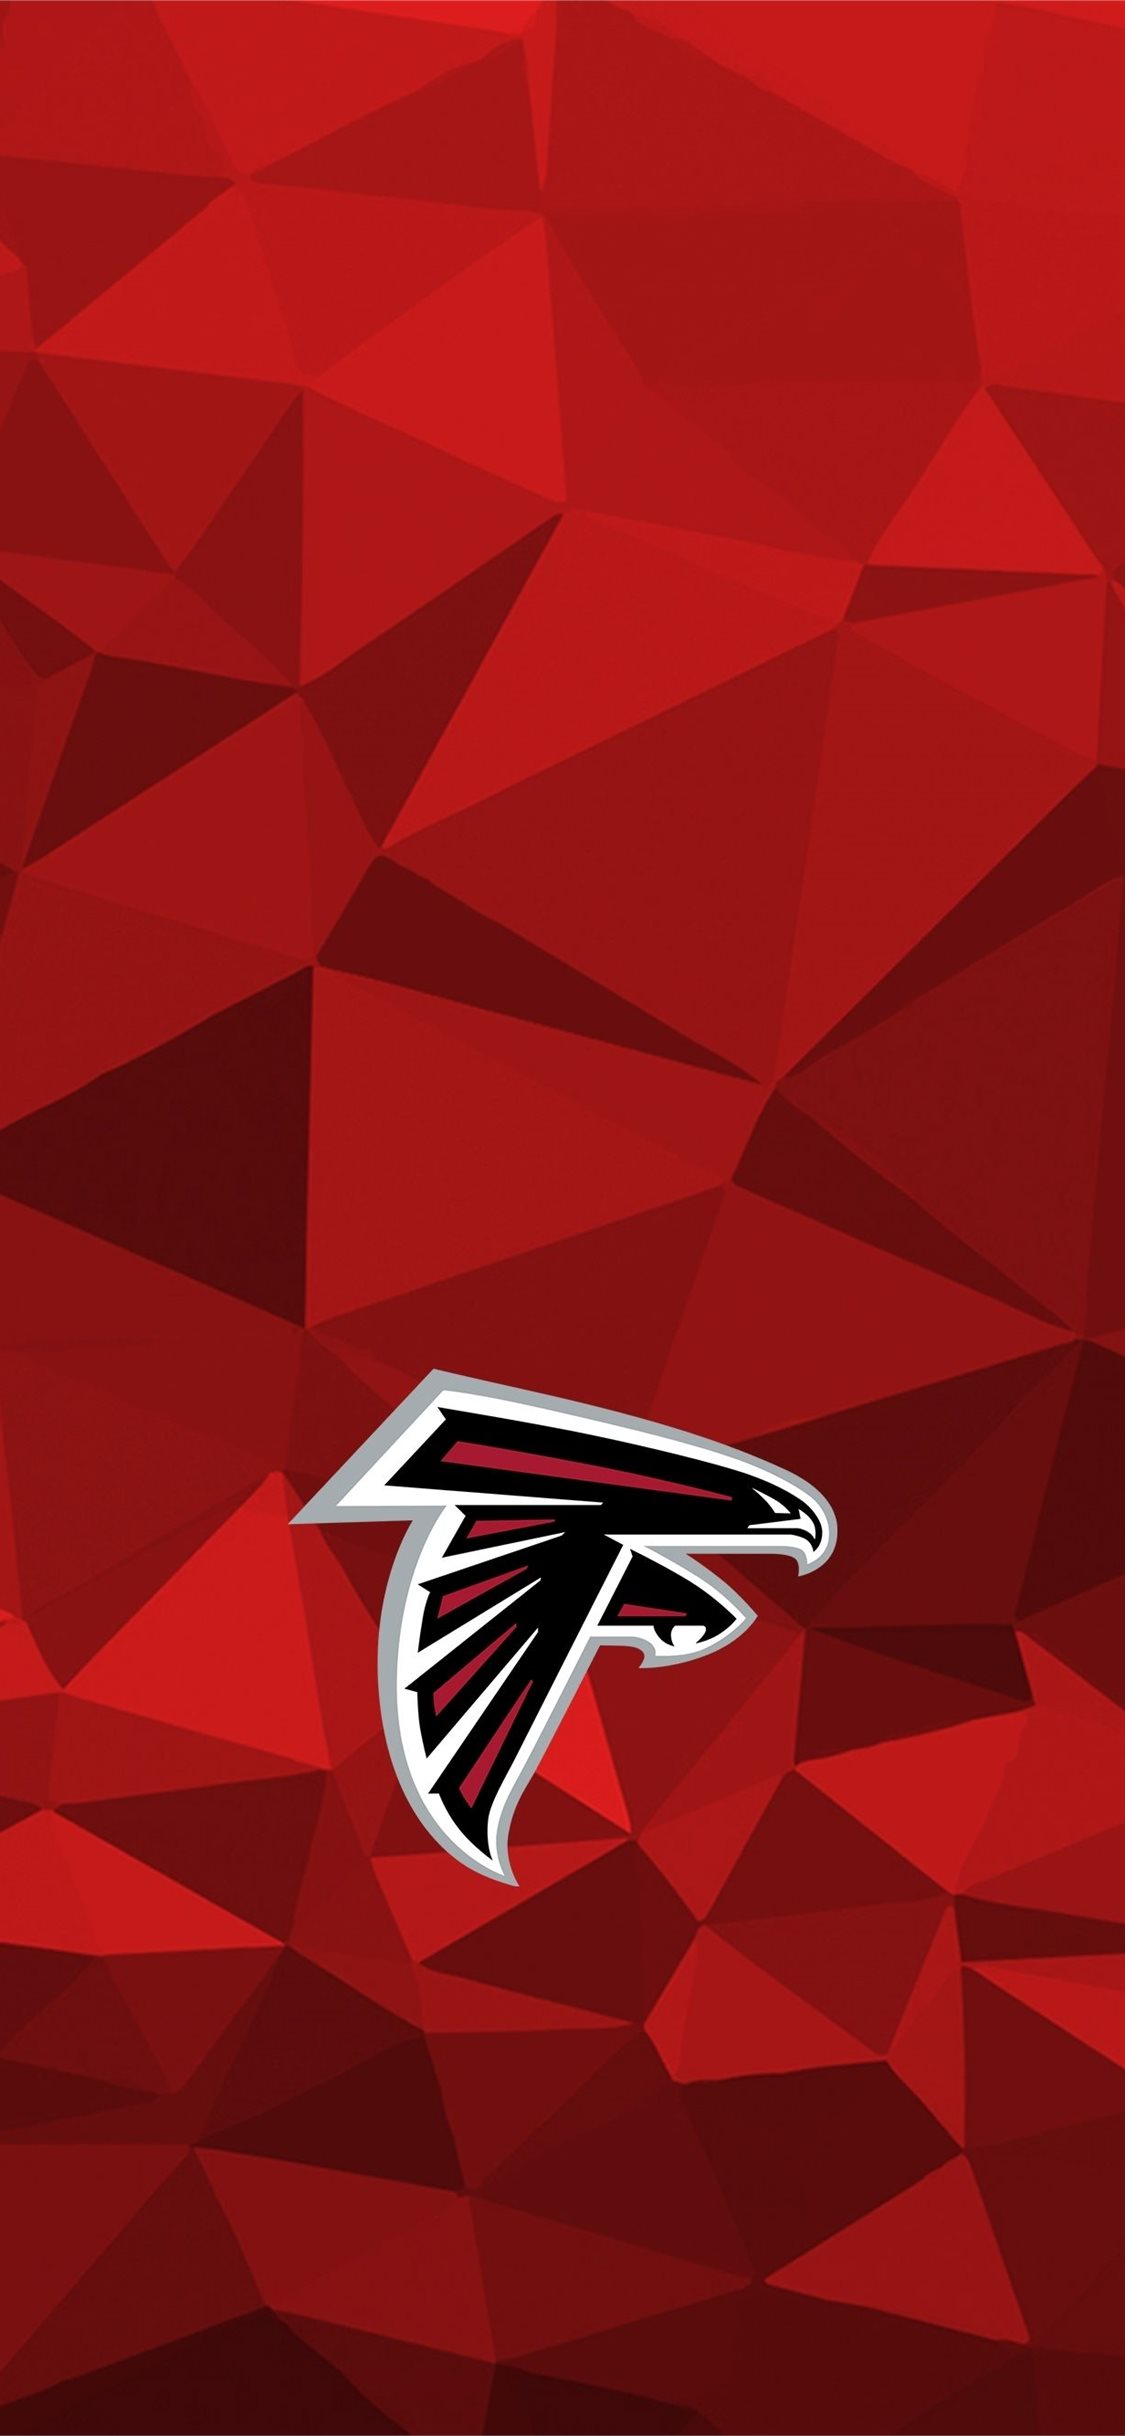 Atlanta Falcons on Twitter Wallpaper edition  httpstcoR0k5vwTc1G   Twitter